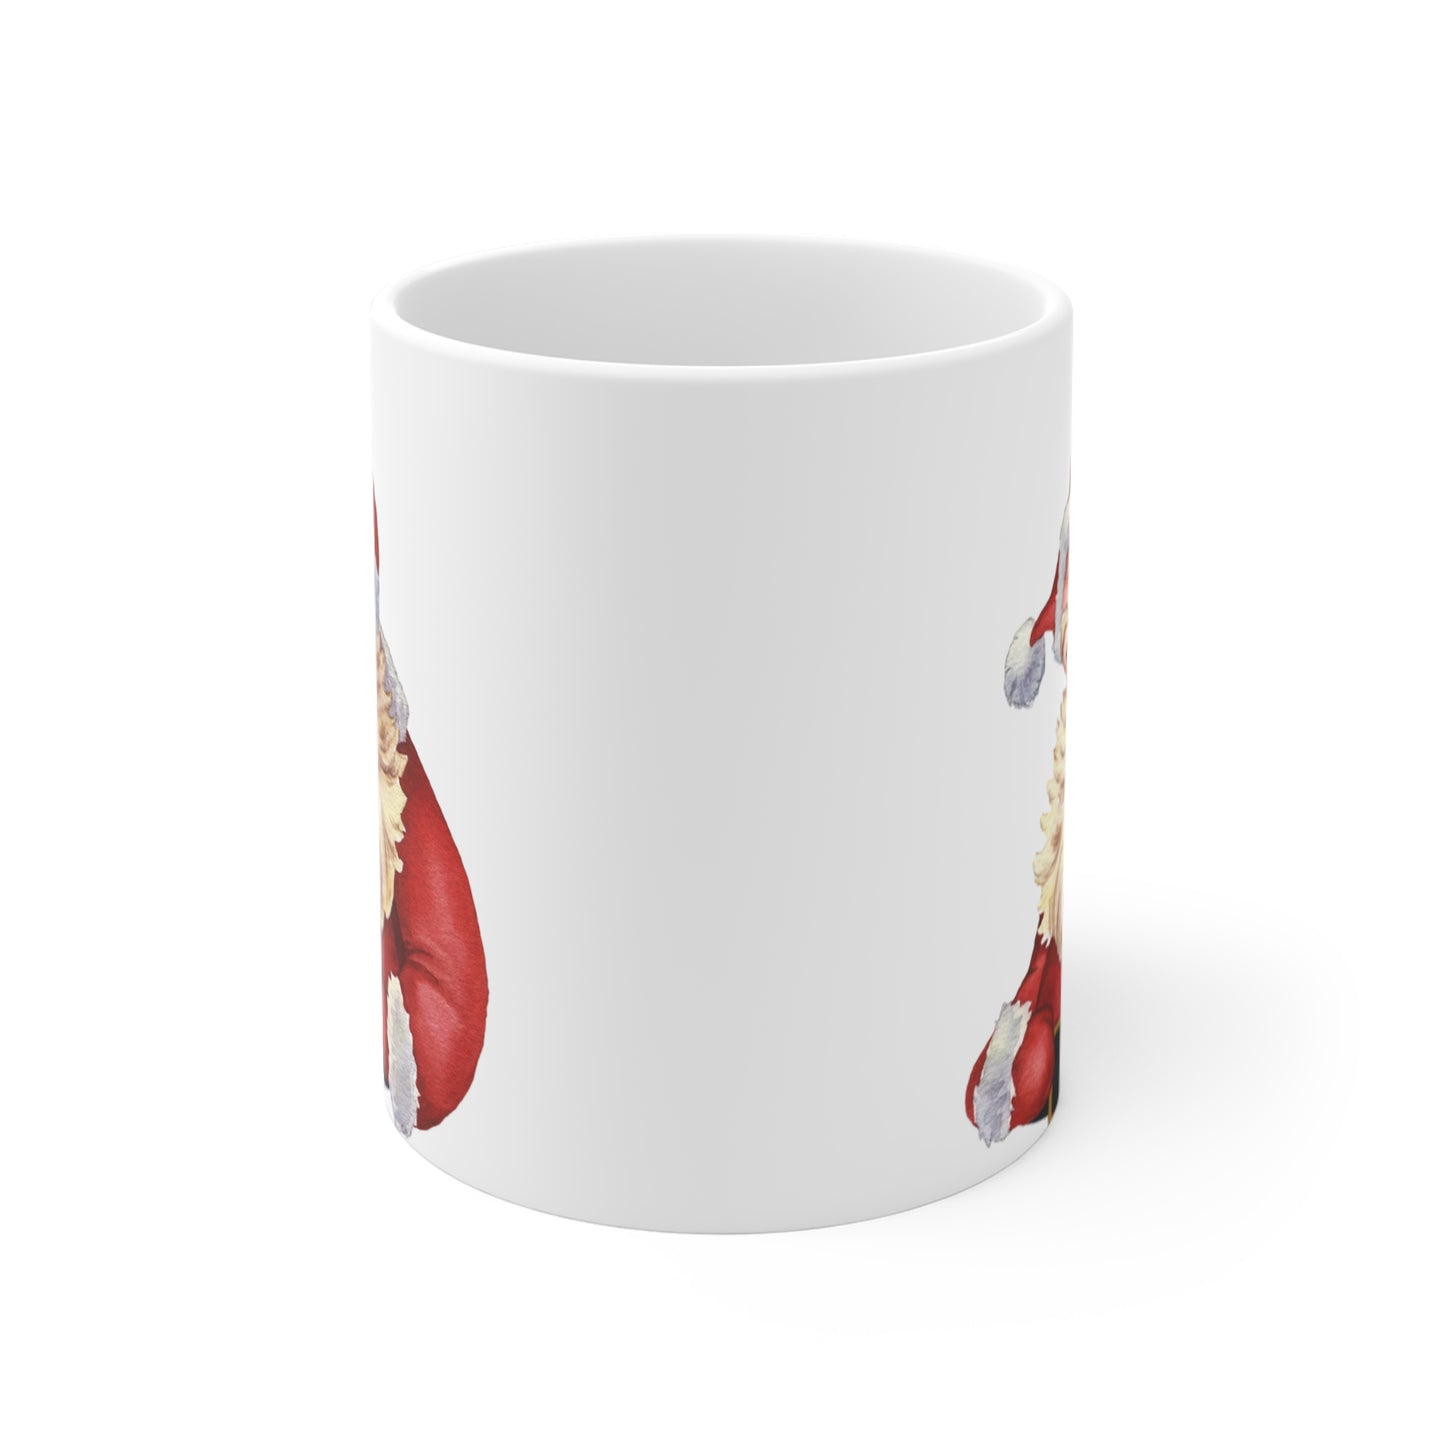 Santa Claus Coffee Mug